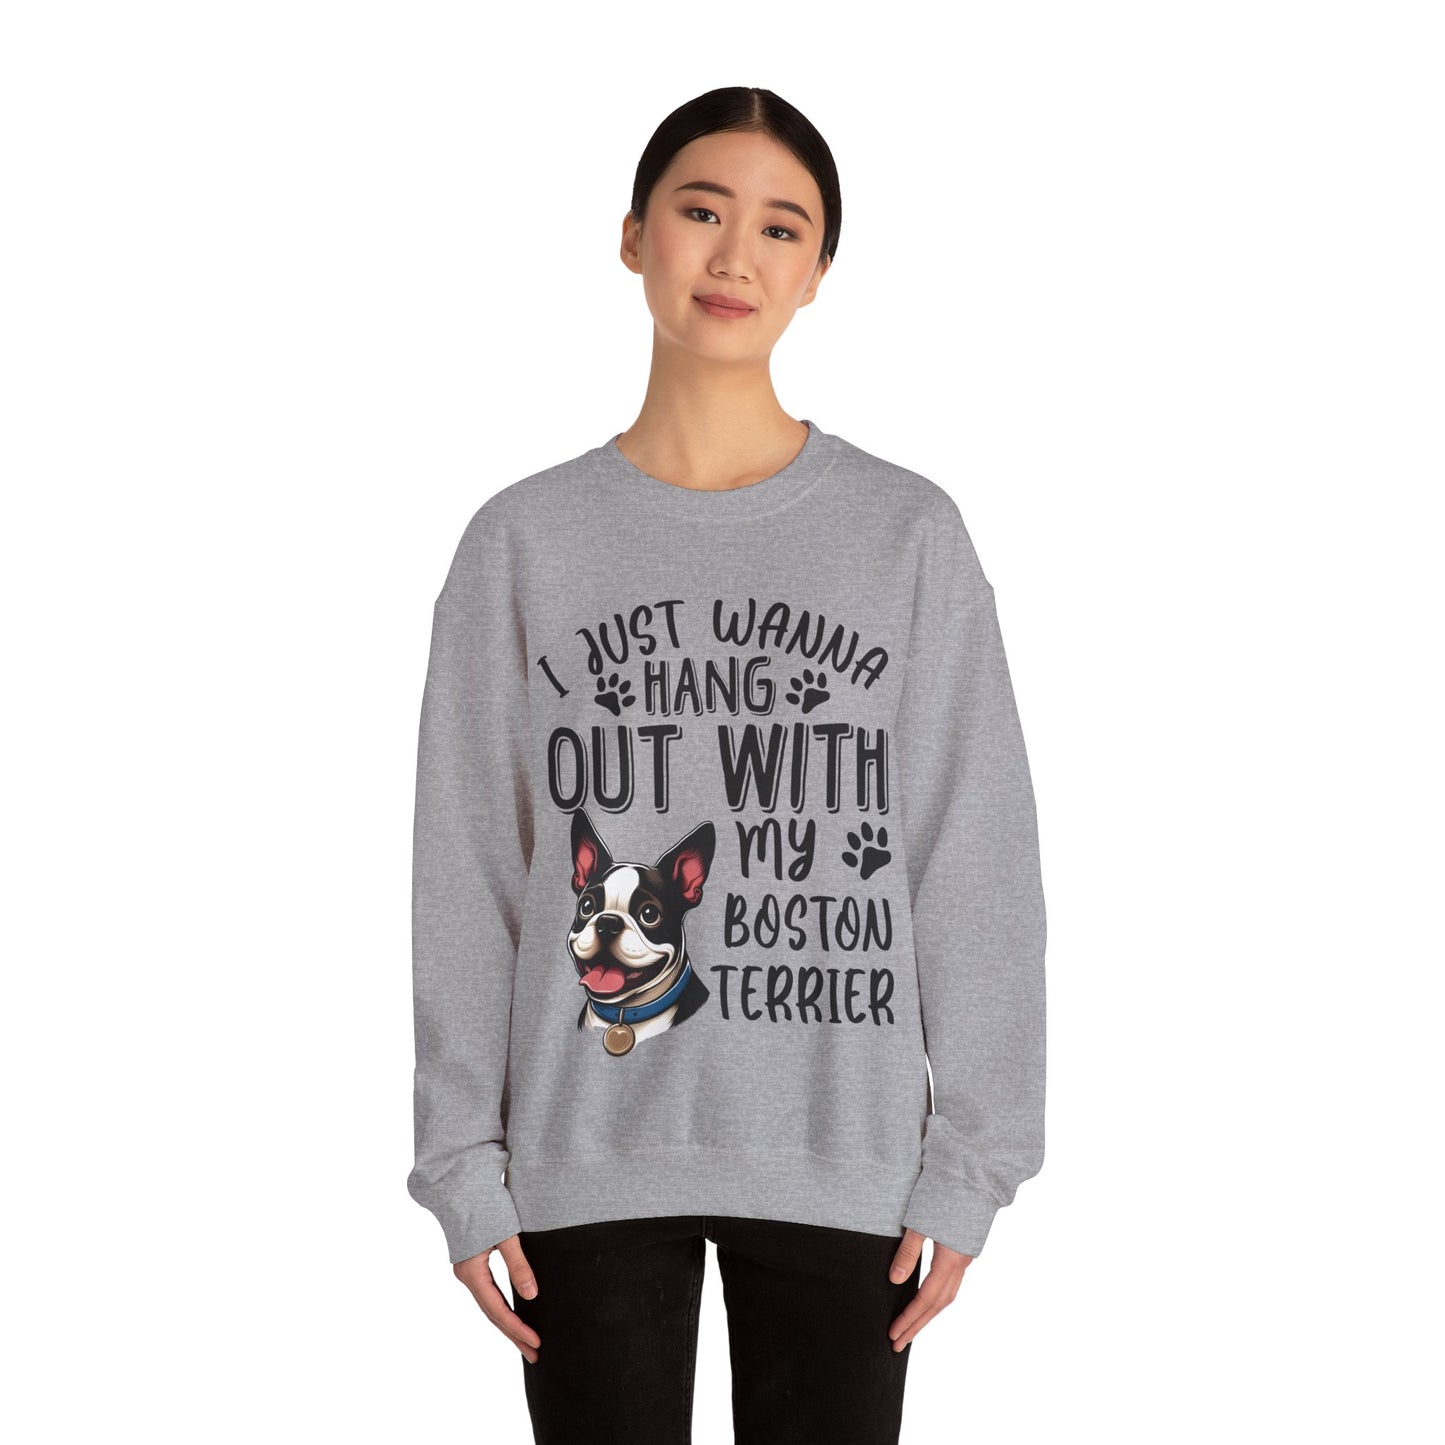 Clancy - Unisex Sweatshirt for Boston Terrier lovers